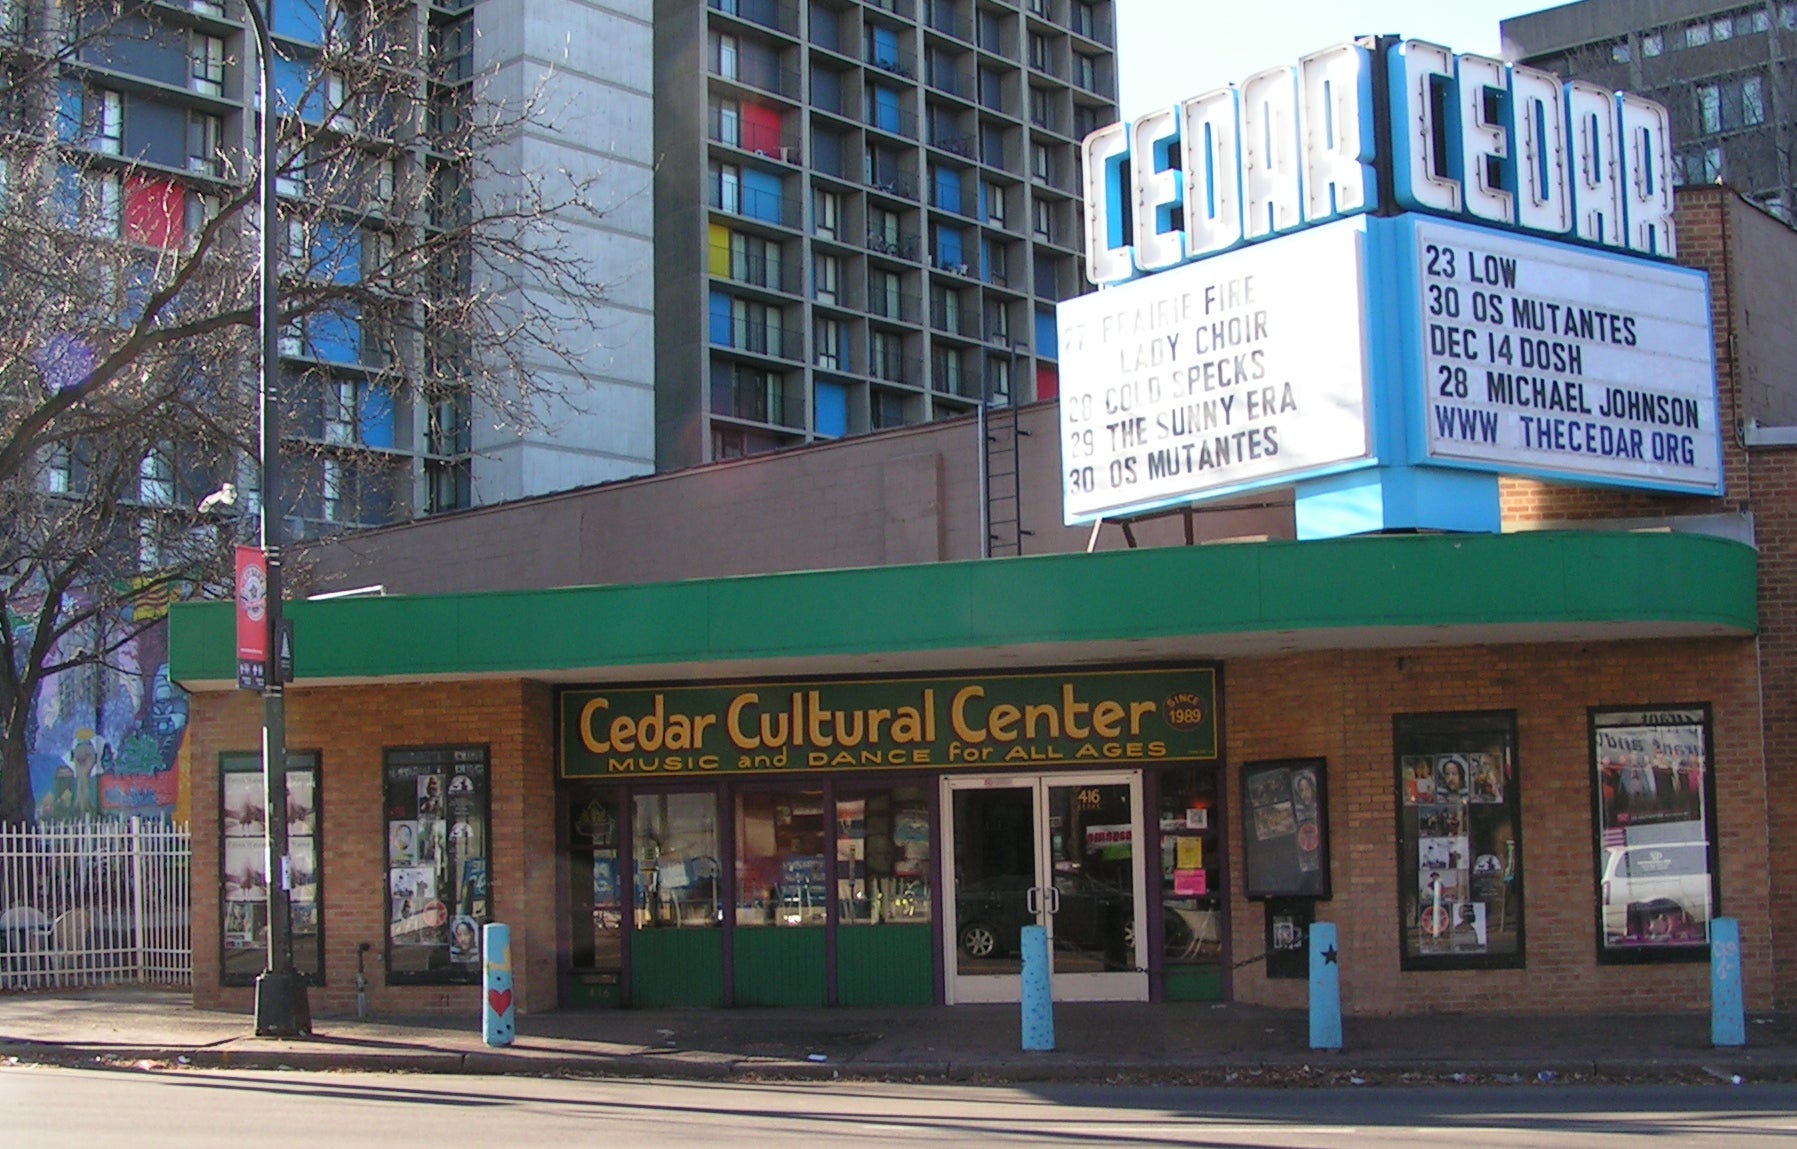 Cedar Cultural Center 2022 show schedule & venue information Live